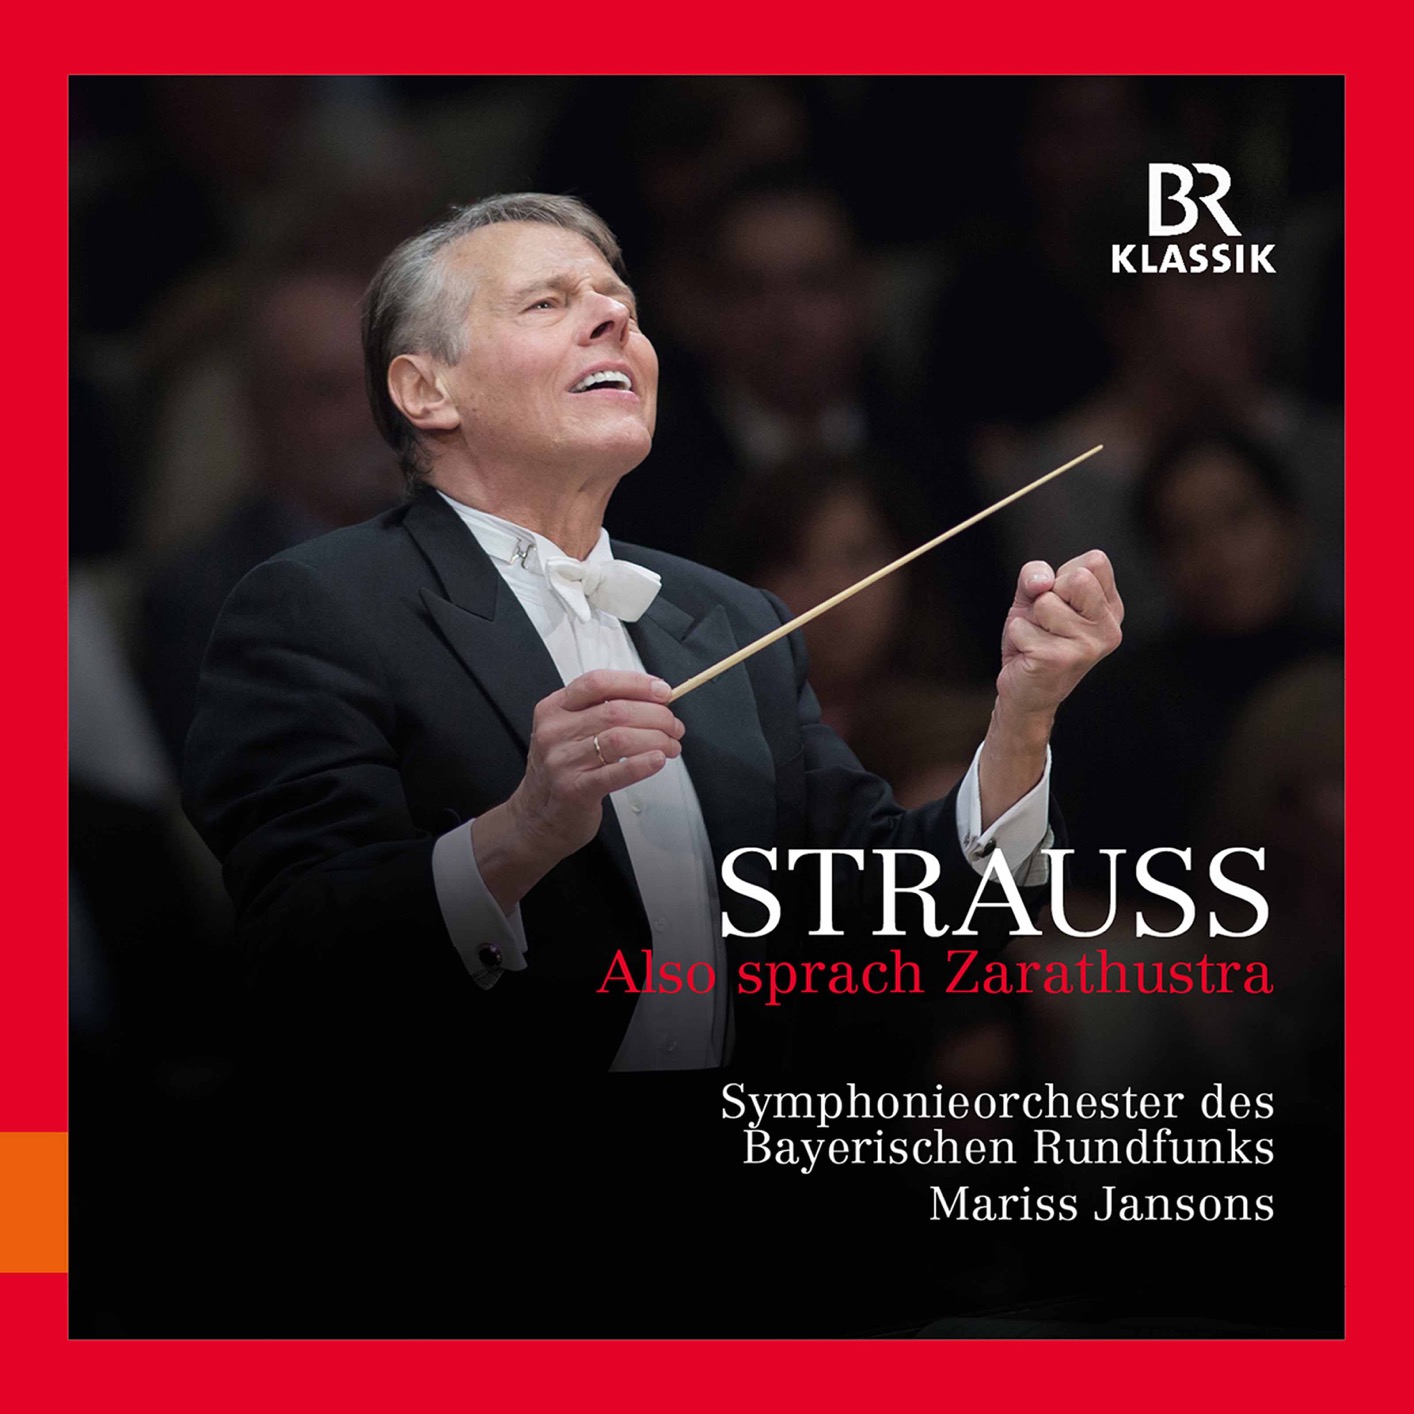 Bavarian Radio Symphony Orchestra & Mariss Jansons - Strauss: Also sprach Zarathustra, Op. 30, TrV 176 (Live) (2020) [FLAC 24bit/48kHz]